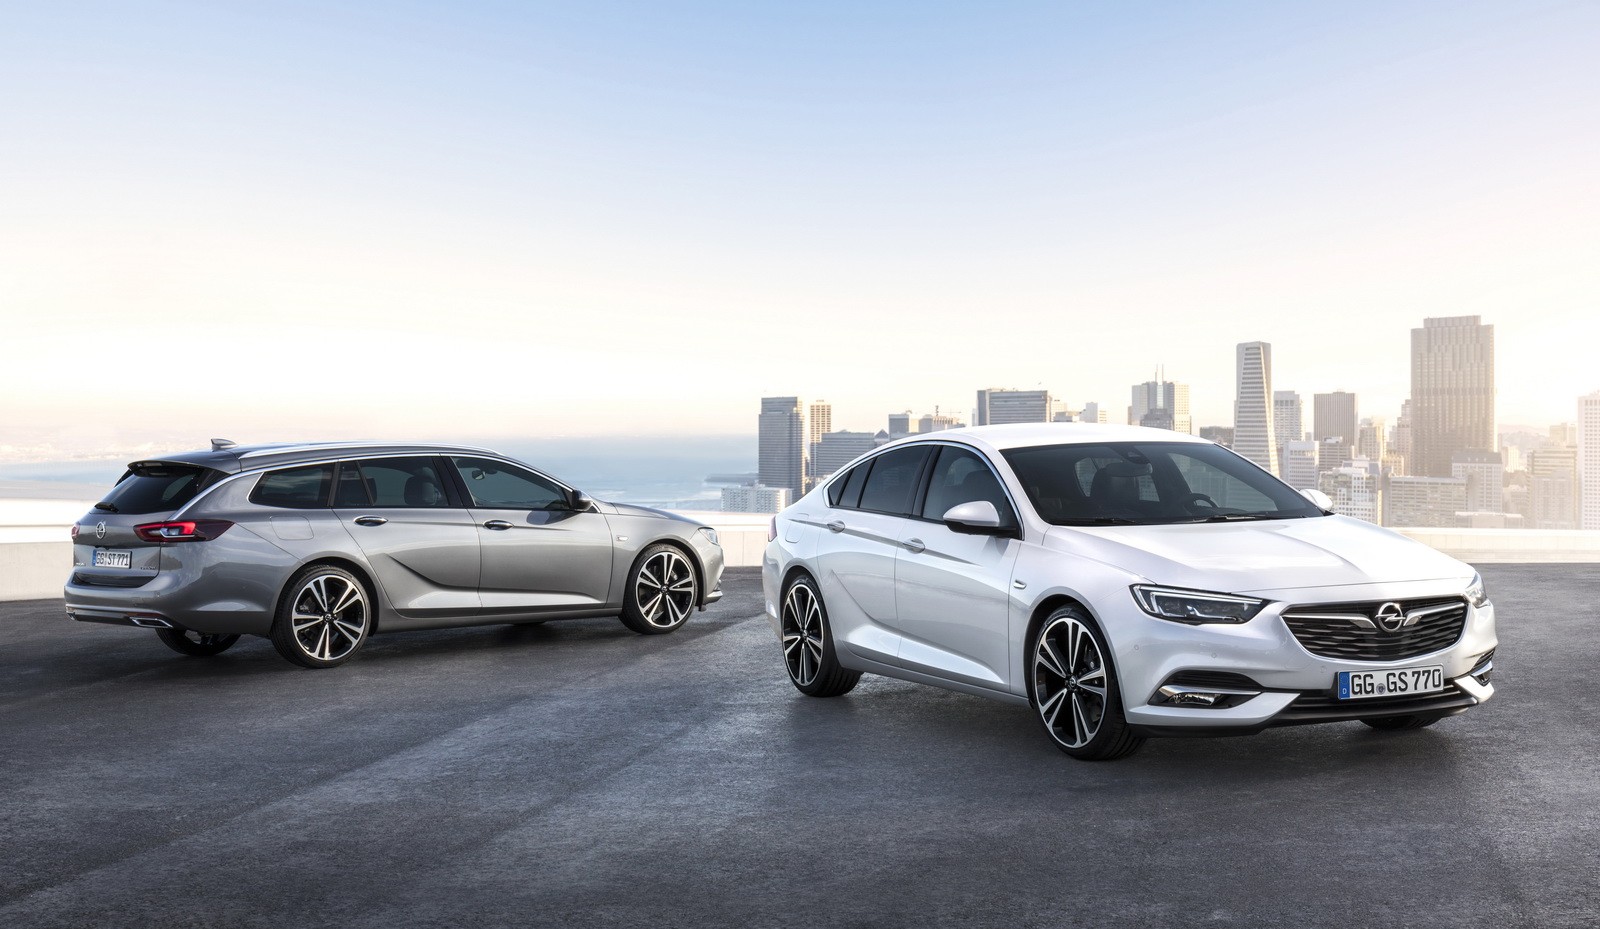 Wagon body style added to 2017 Opel Insignia range